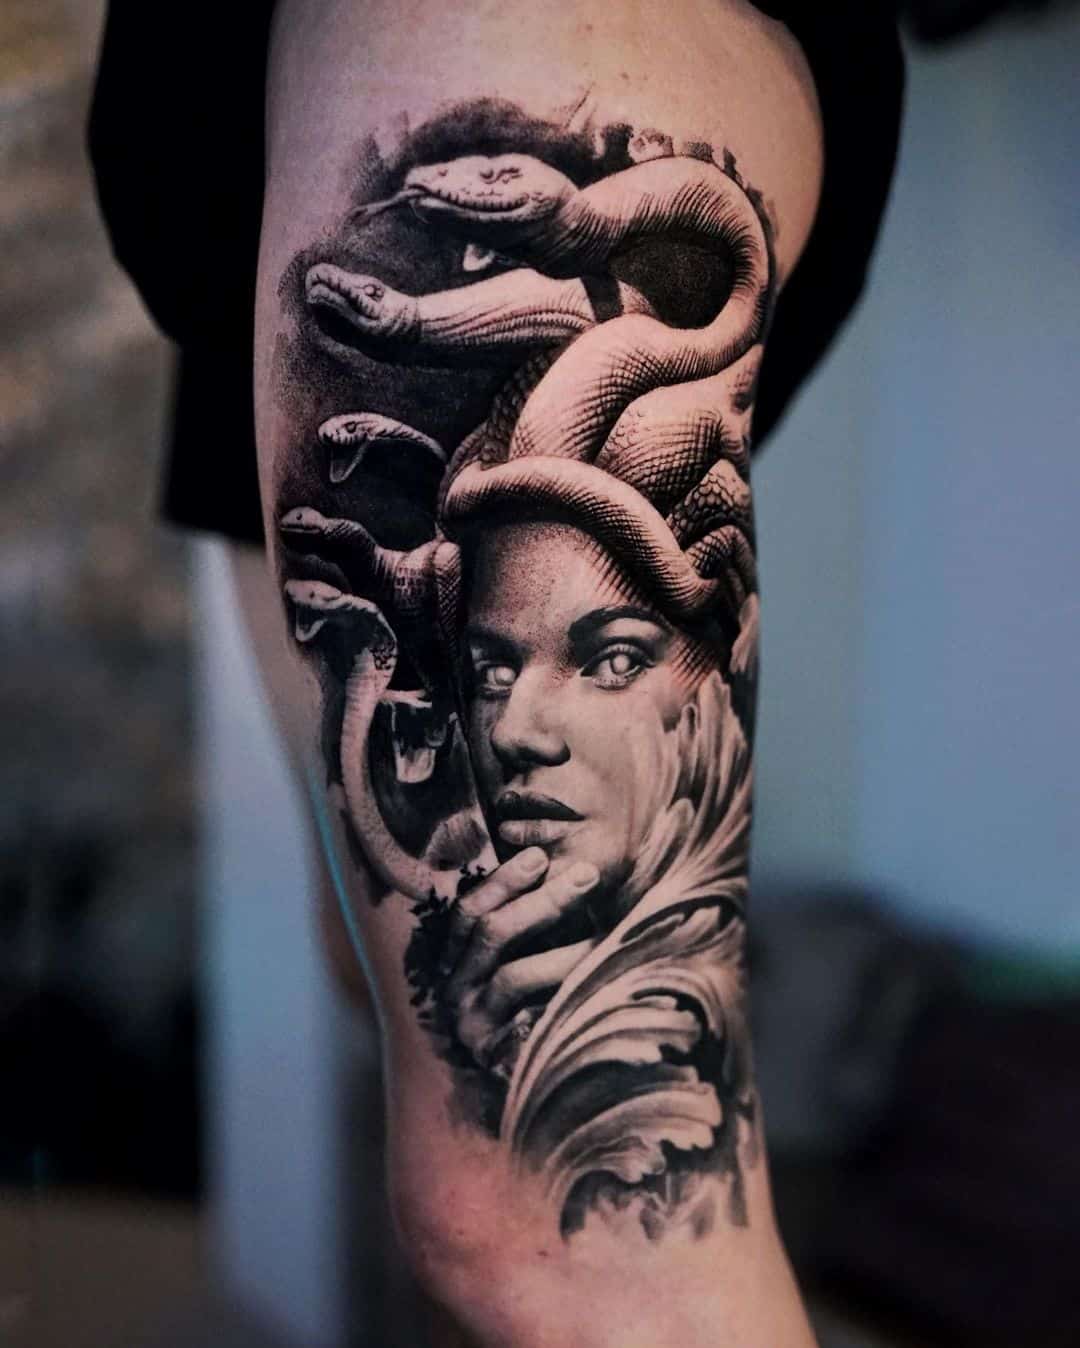 Medusa tattoo on thigh by pascalavendano